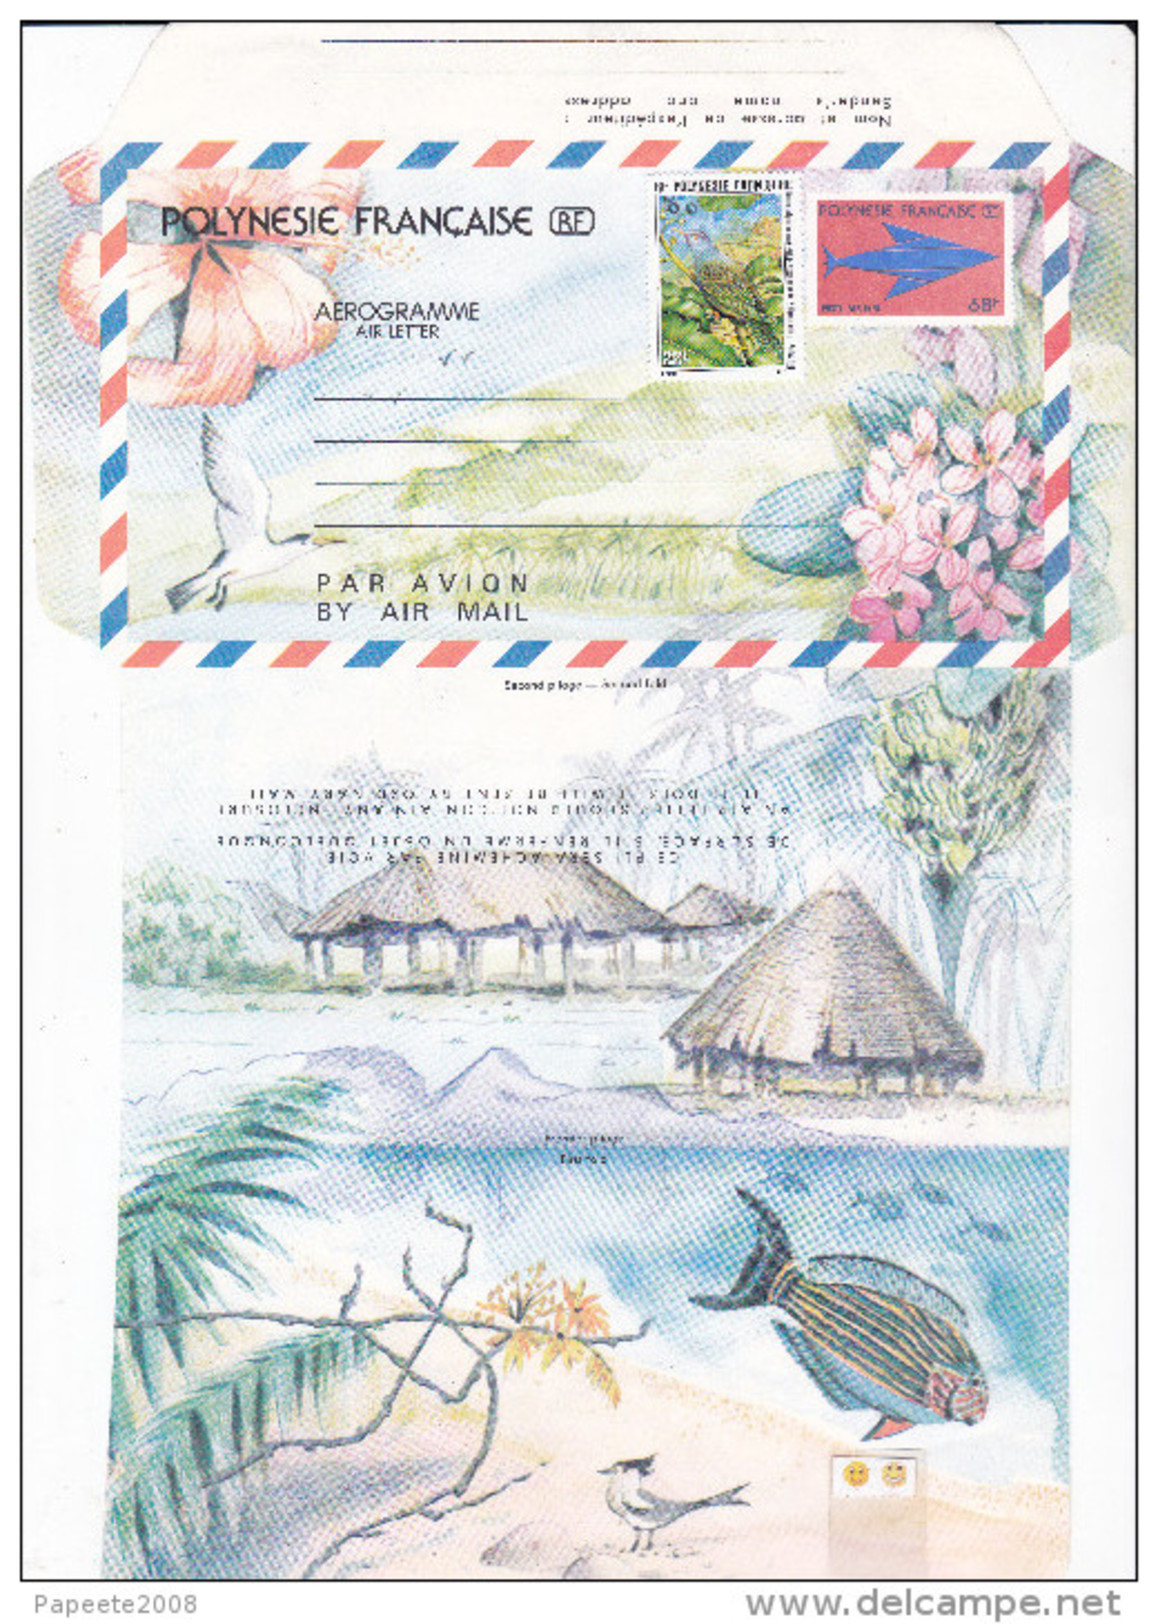 Polynesie Française / Tahiti - Aérogramme à 68 F CFP - 1988 - Neuf / Surchargé à 100 F - Aerograms